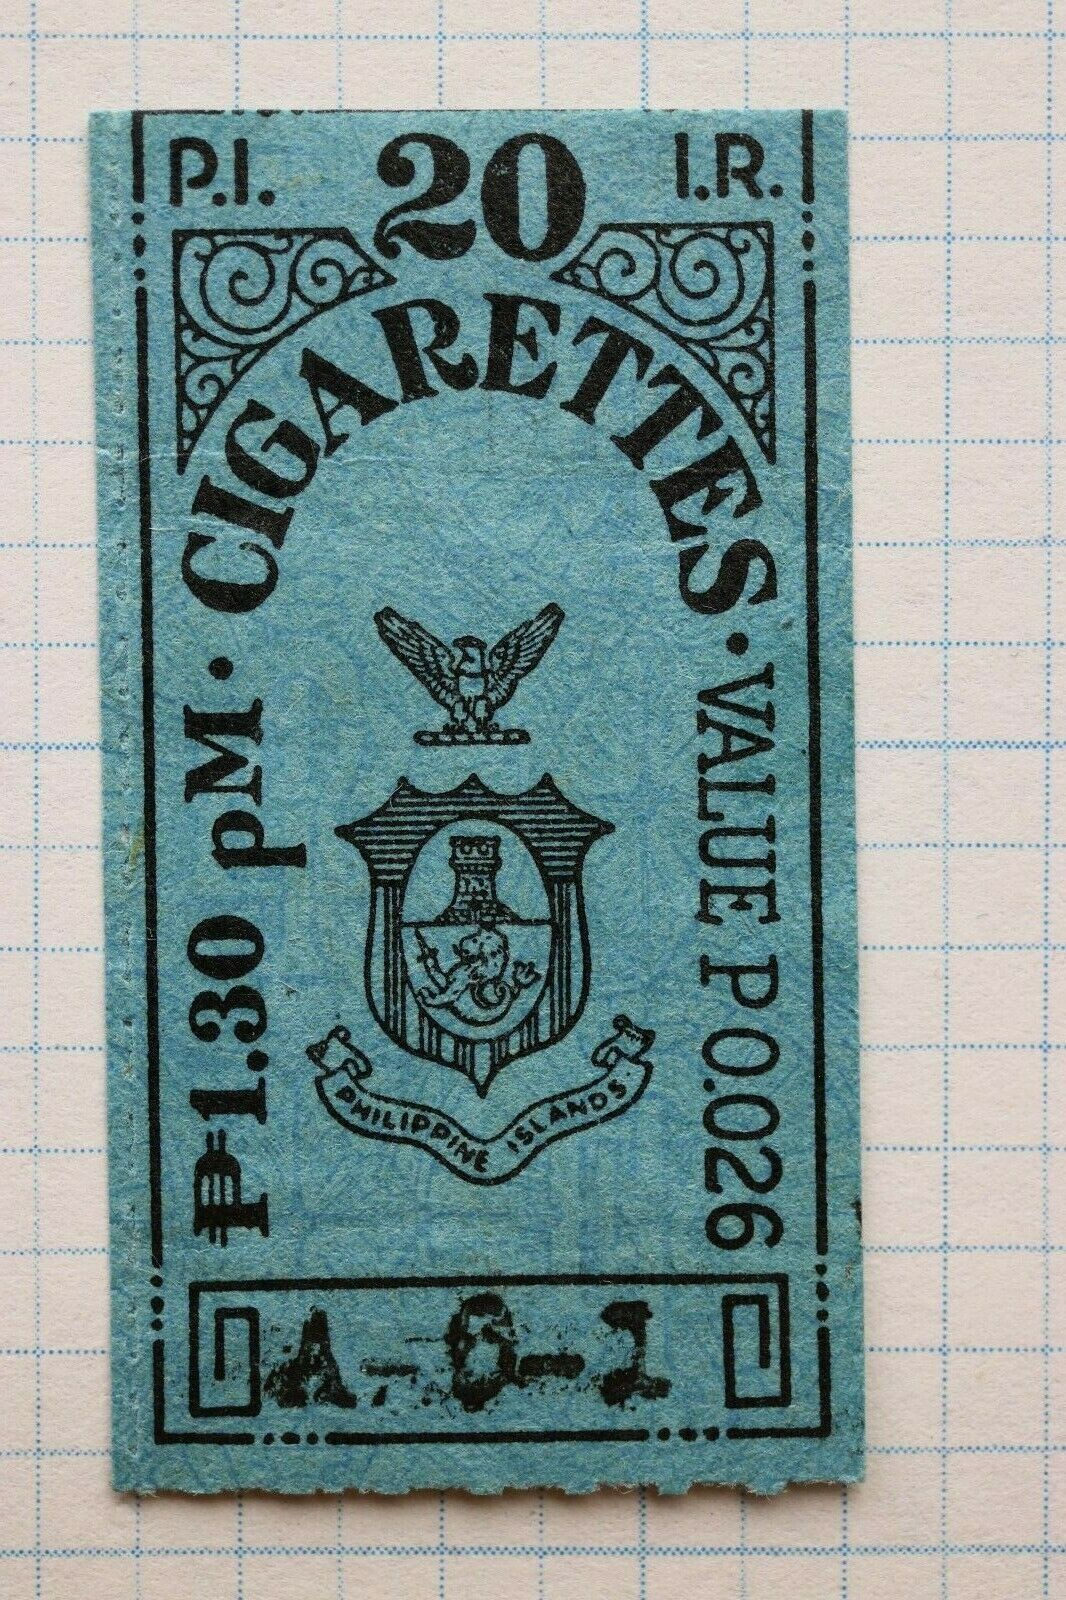 Philippines IR Revenue  W1241 20 cigarettes pack blue tax stamp  DL